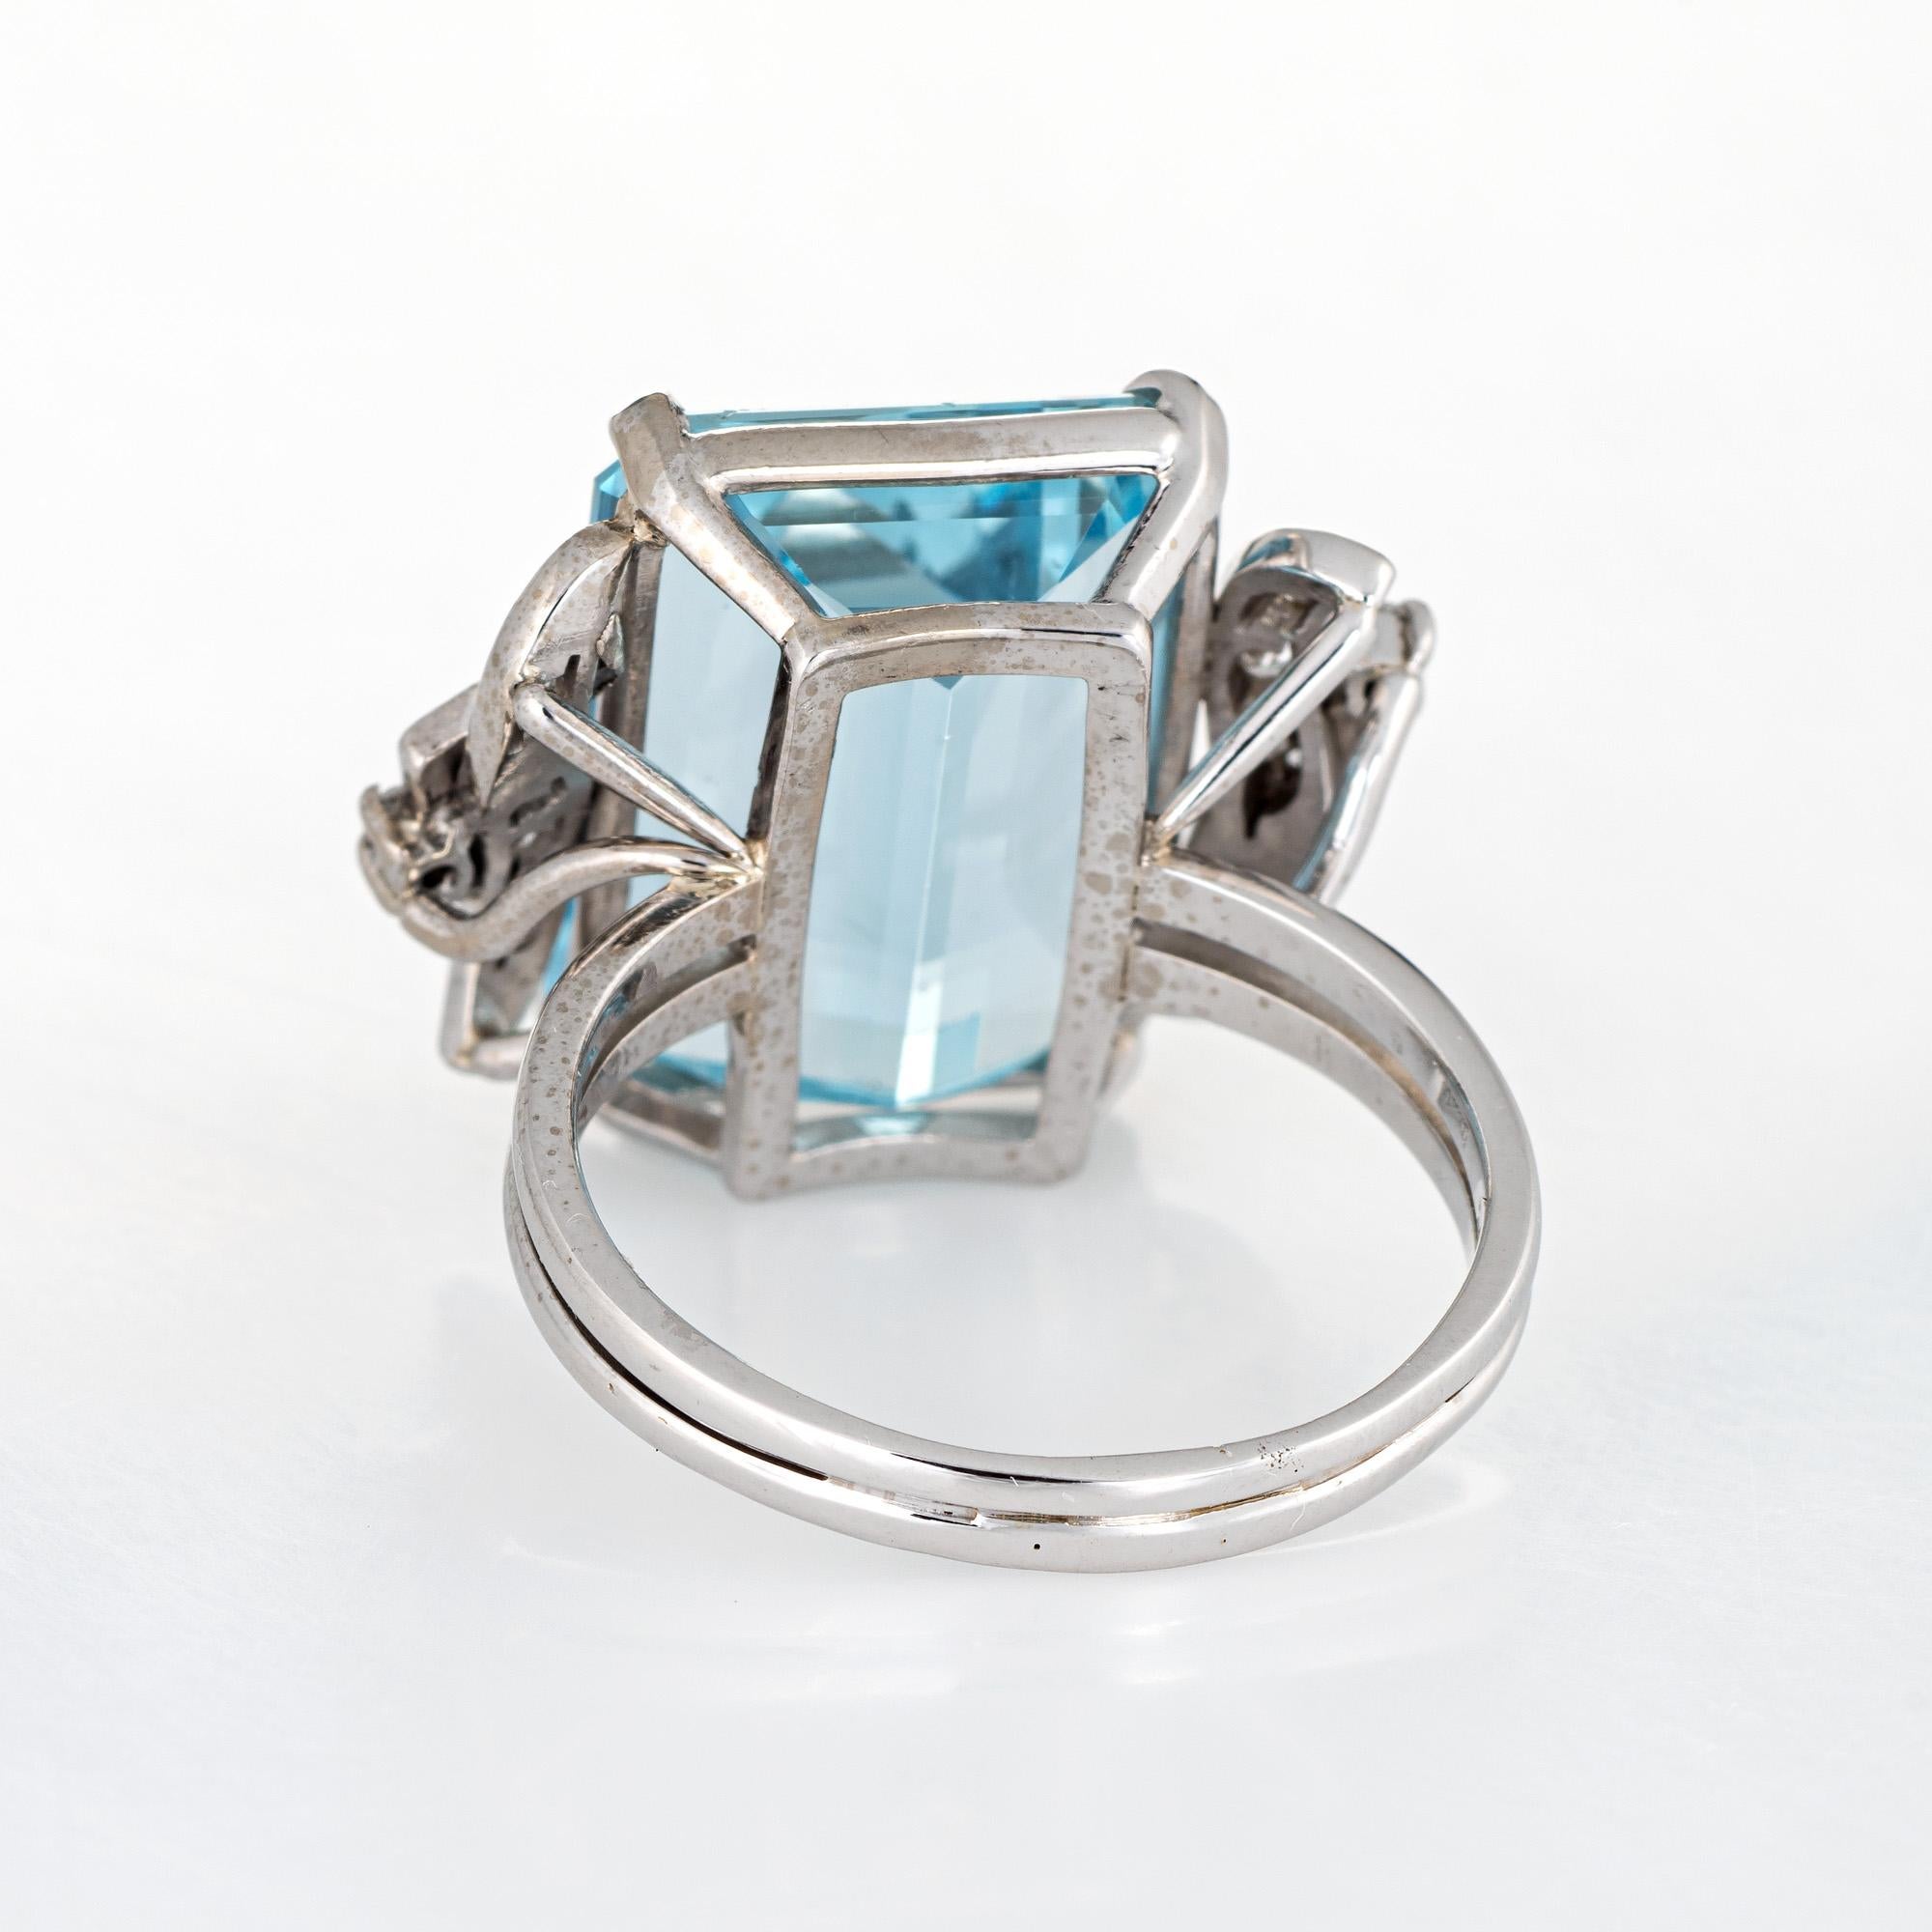 Emerald Cut 12ct Aquamarine Diamond Ring Vintage 18k White Gold Fine Cocktail Jewelry